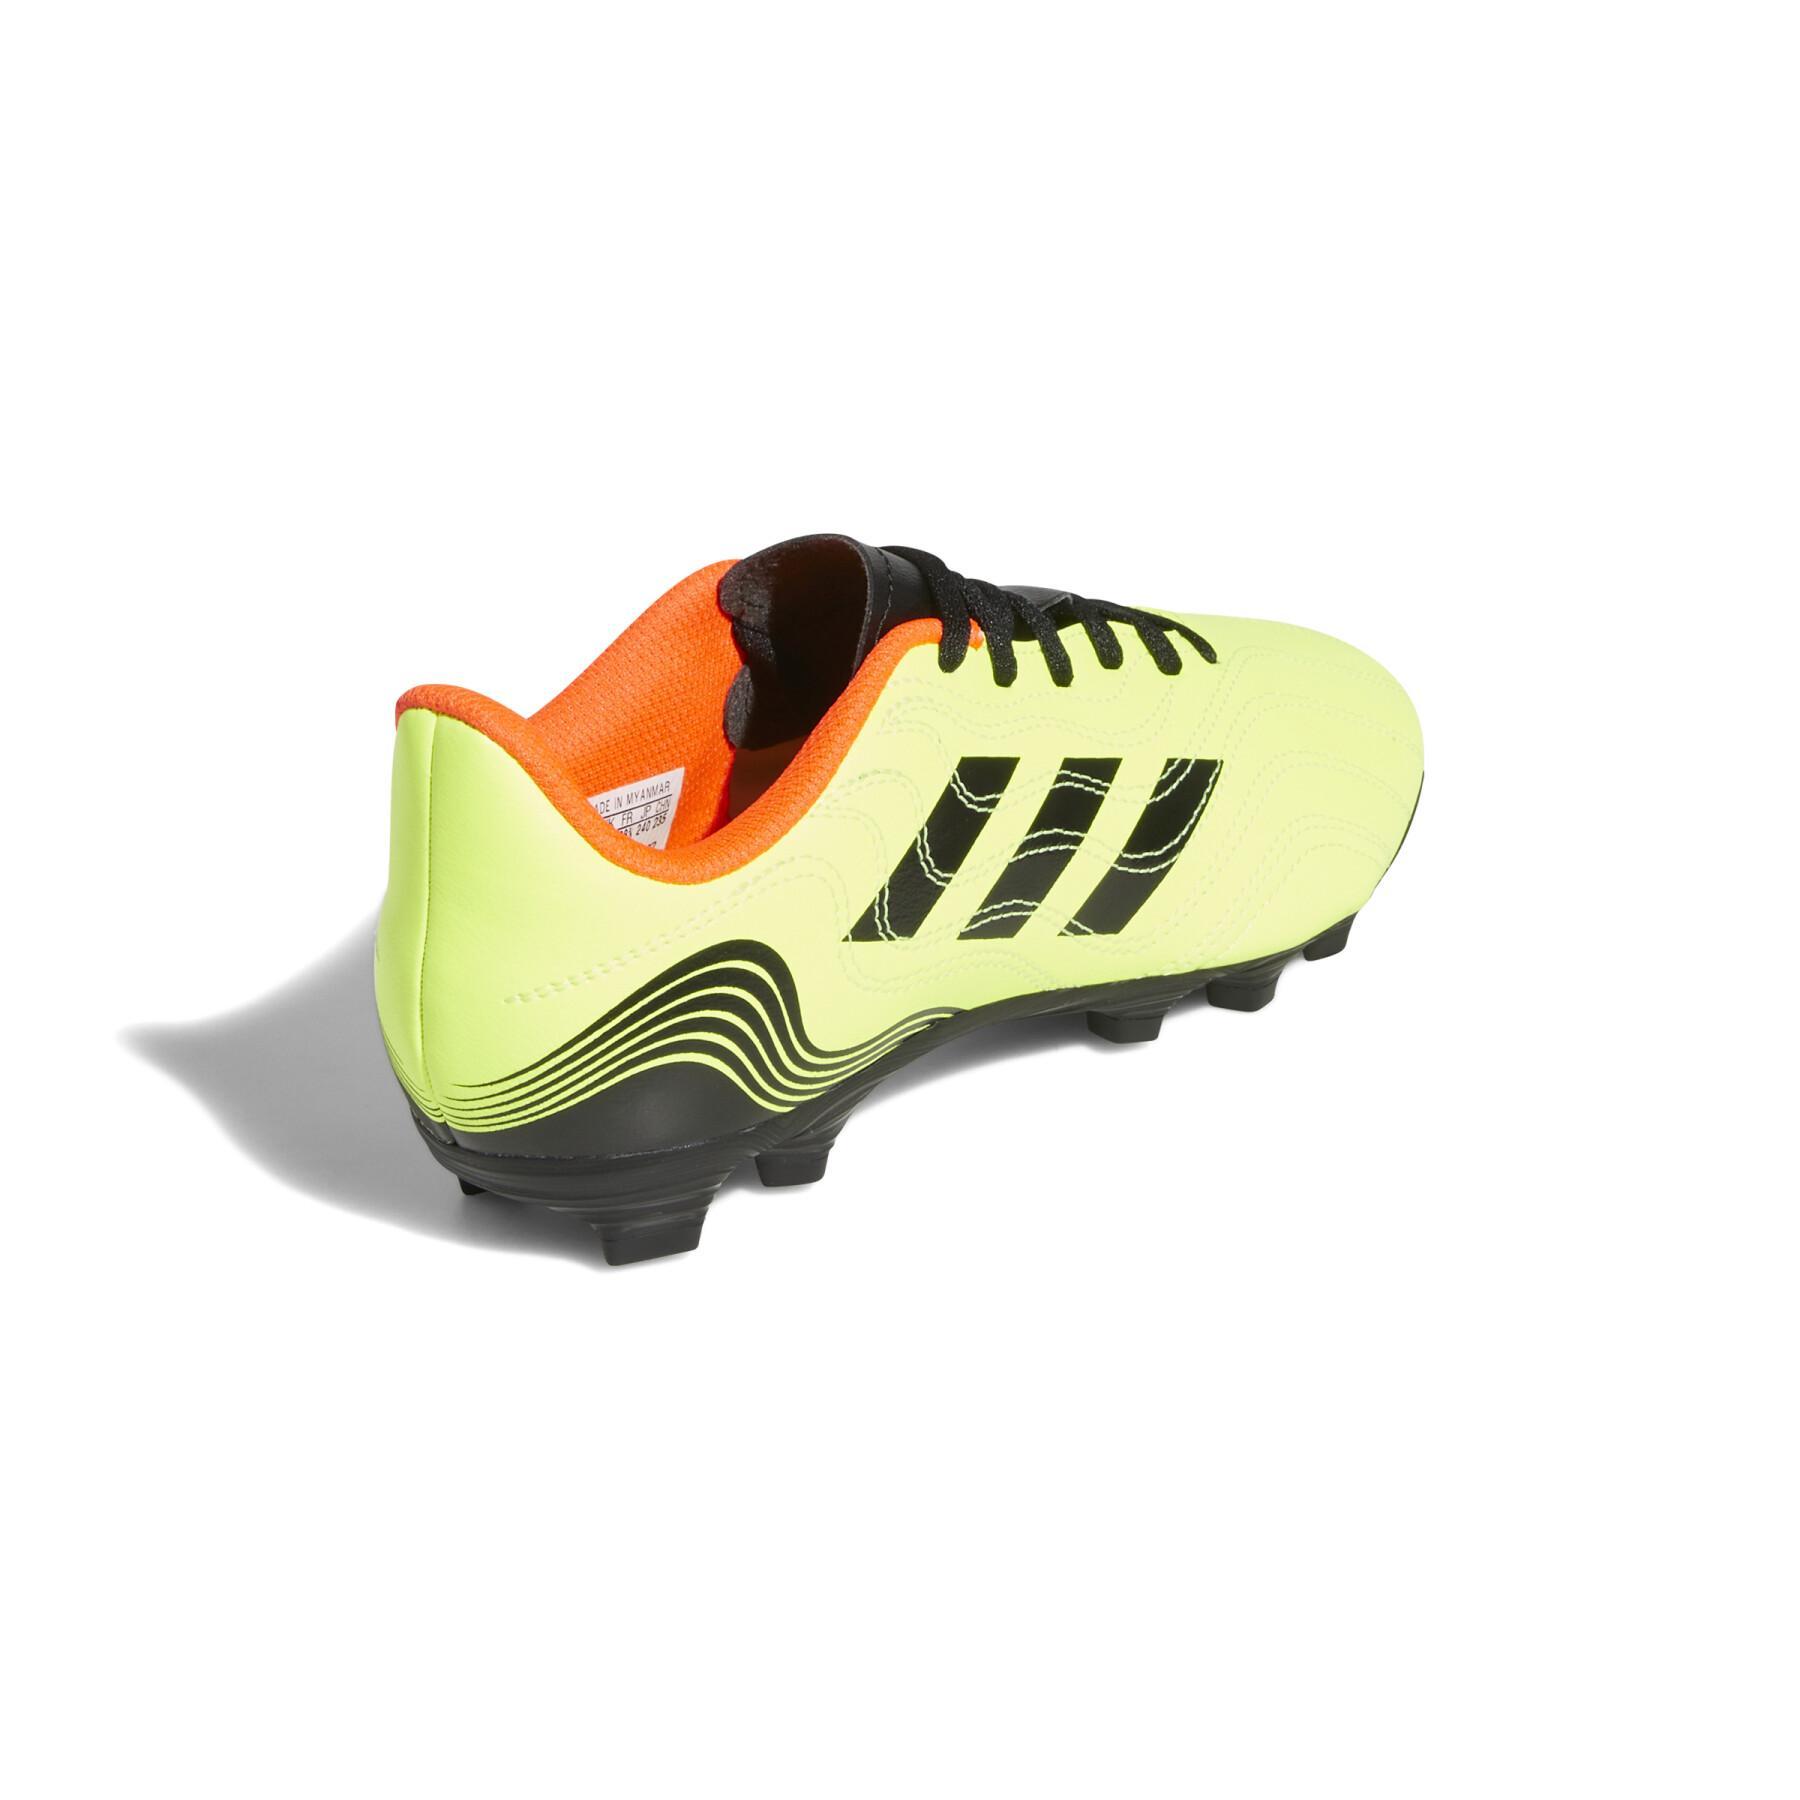 Soccer shoes adidas Copa Sense.4 MS